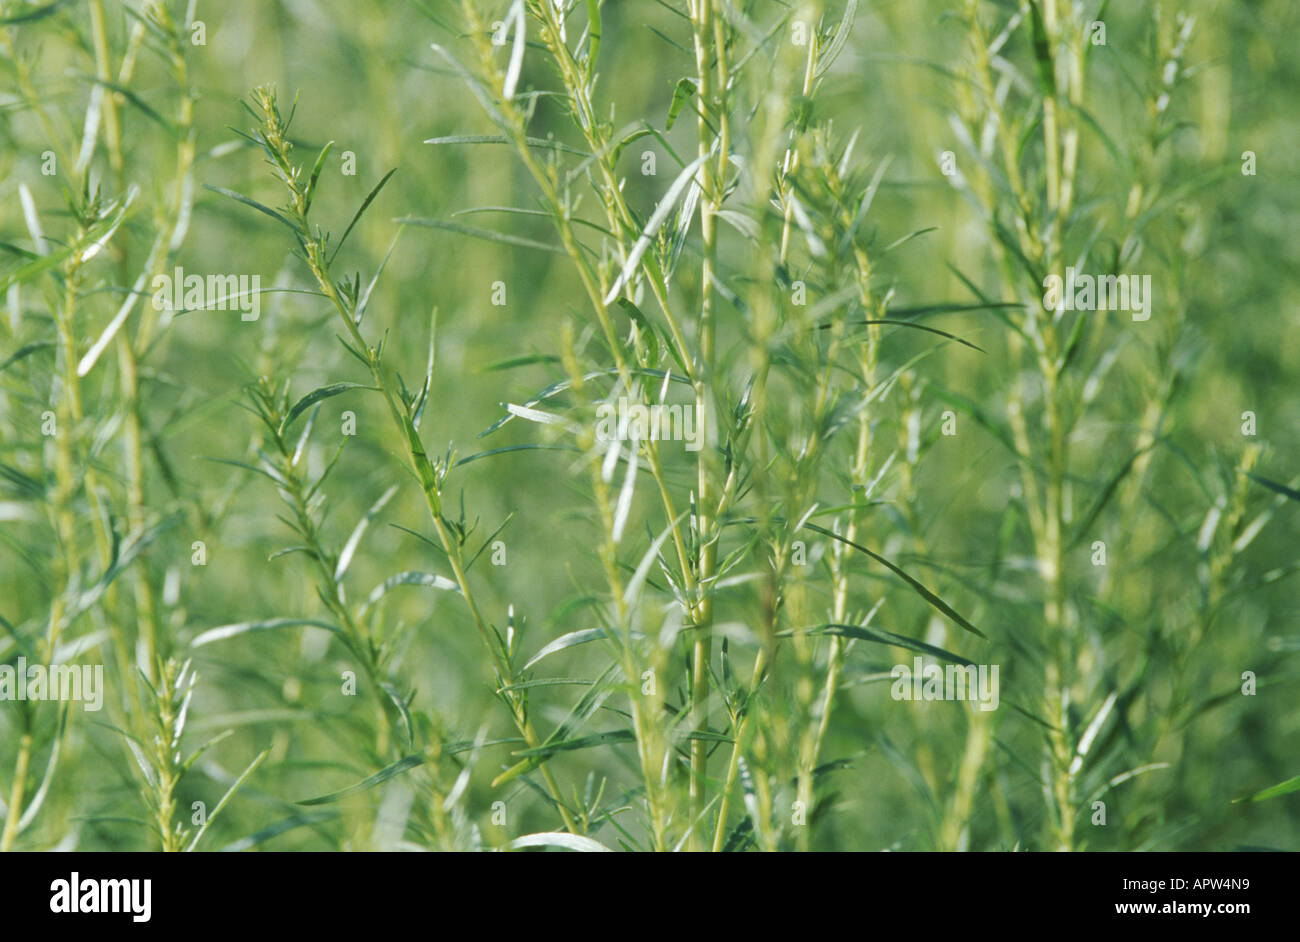 dragon sagewort, tarragon, estragole, esdragol, esdragon (Artemisia dracunculus) Stock Photo